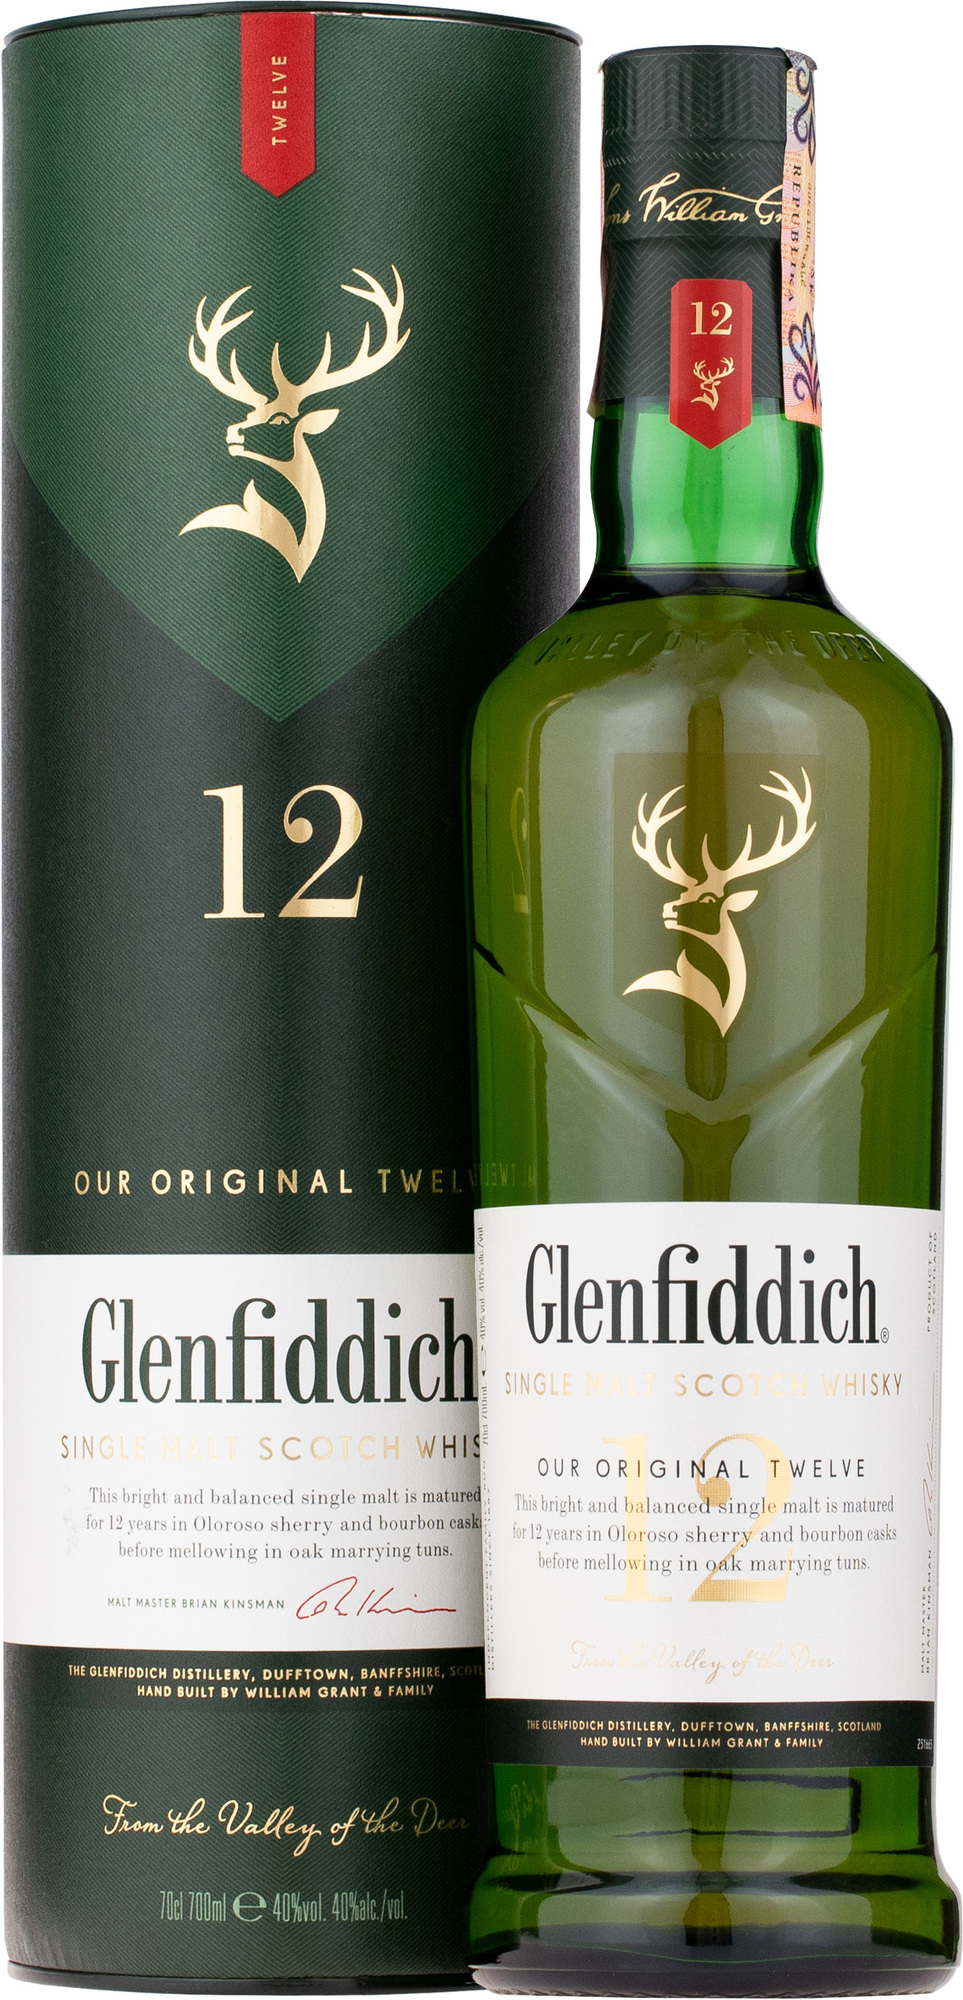 Glenfiddich 12 Year Old - Speyside single malt whisky